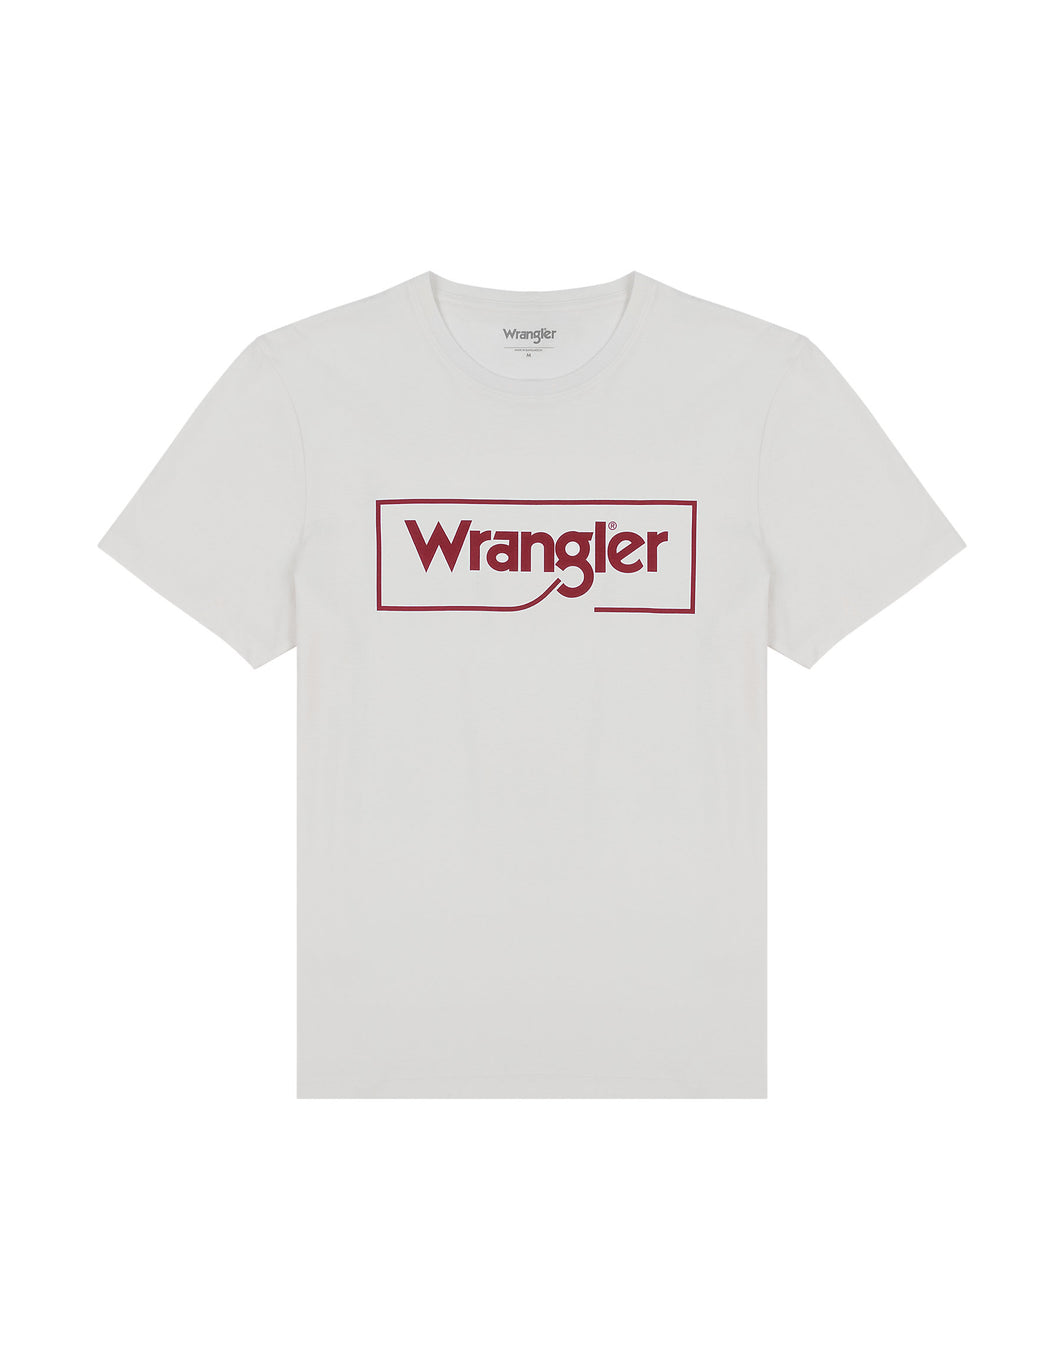 Wrangler White Tee logo